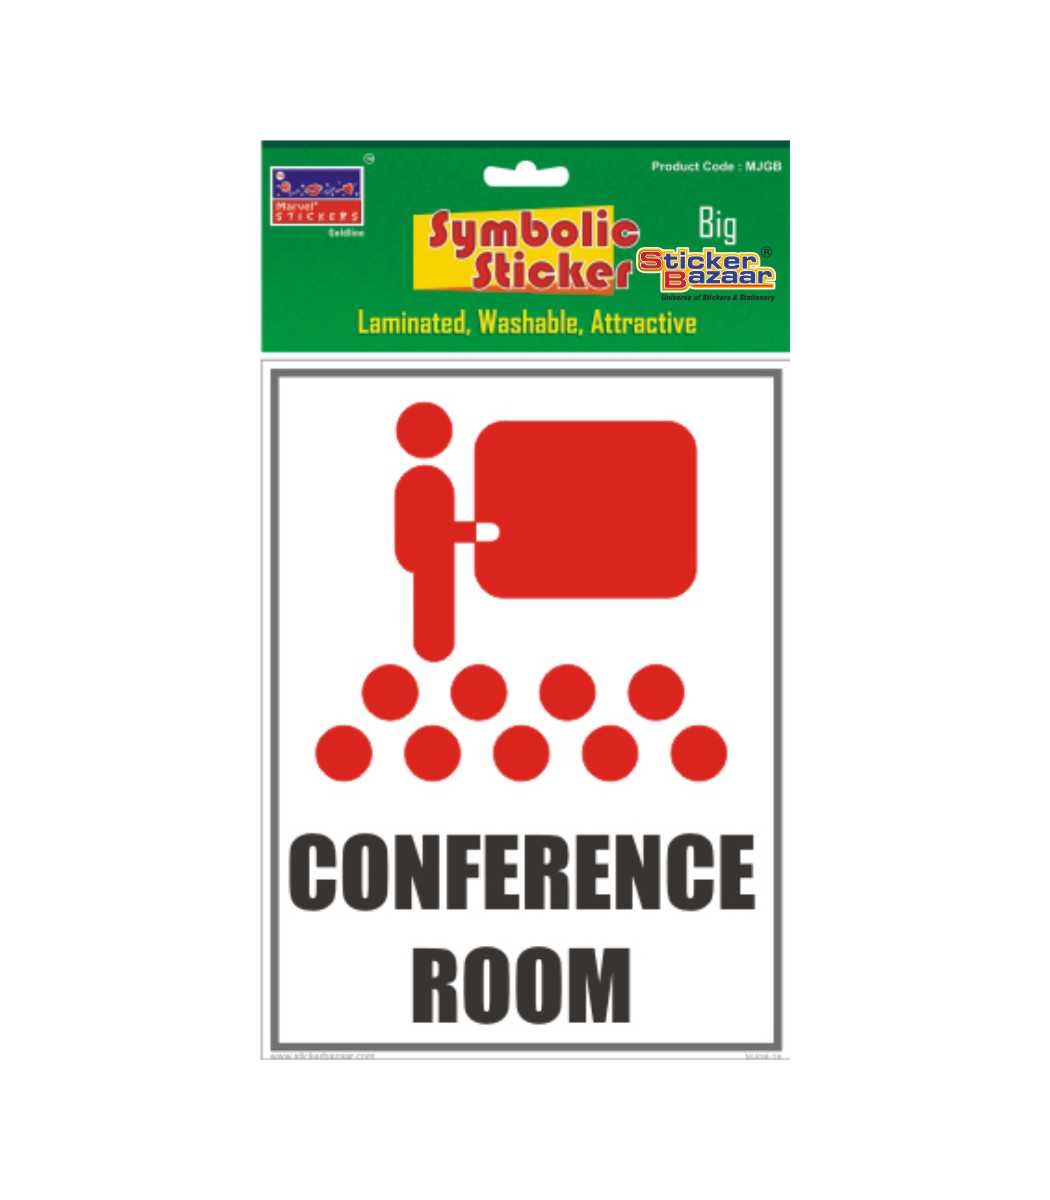 Conference Room Big Symbolic Sticker